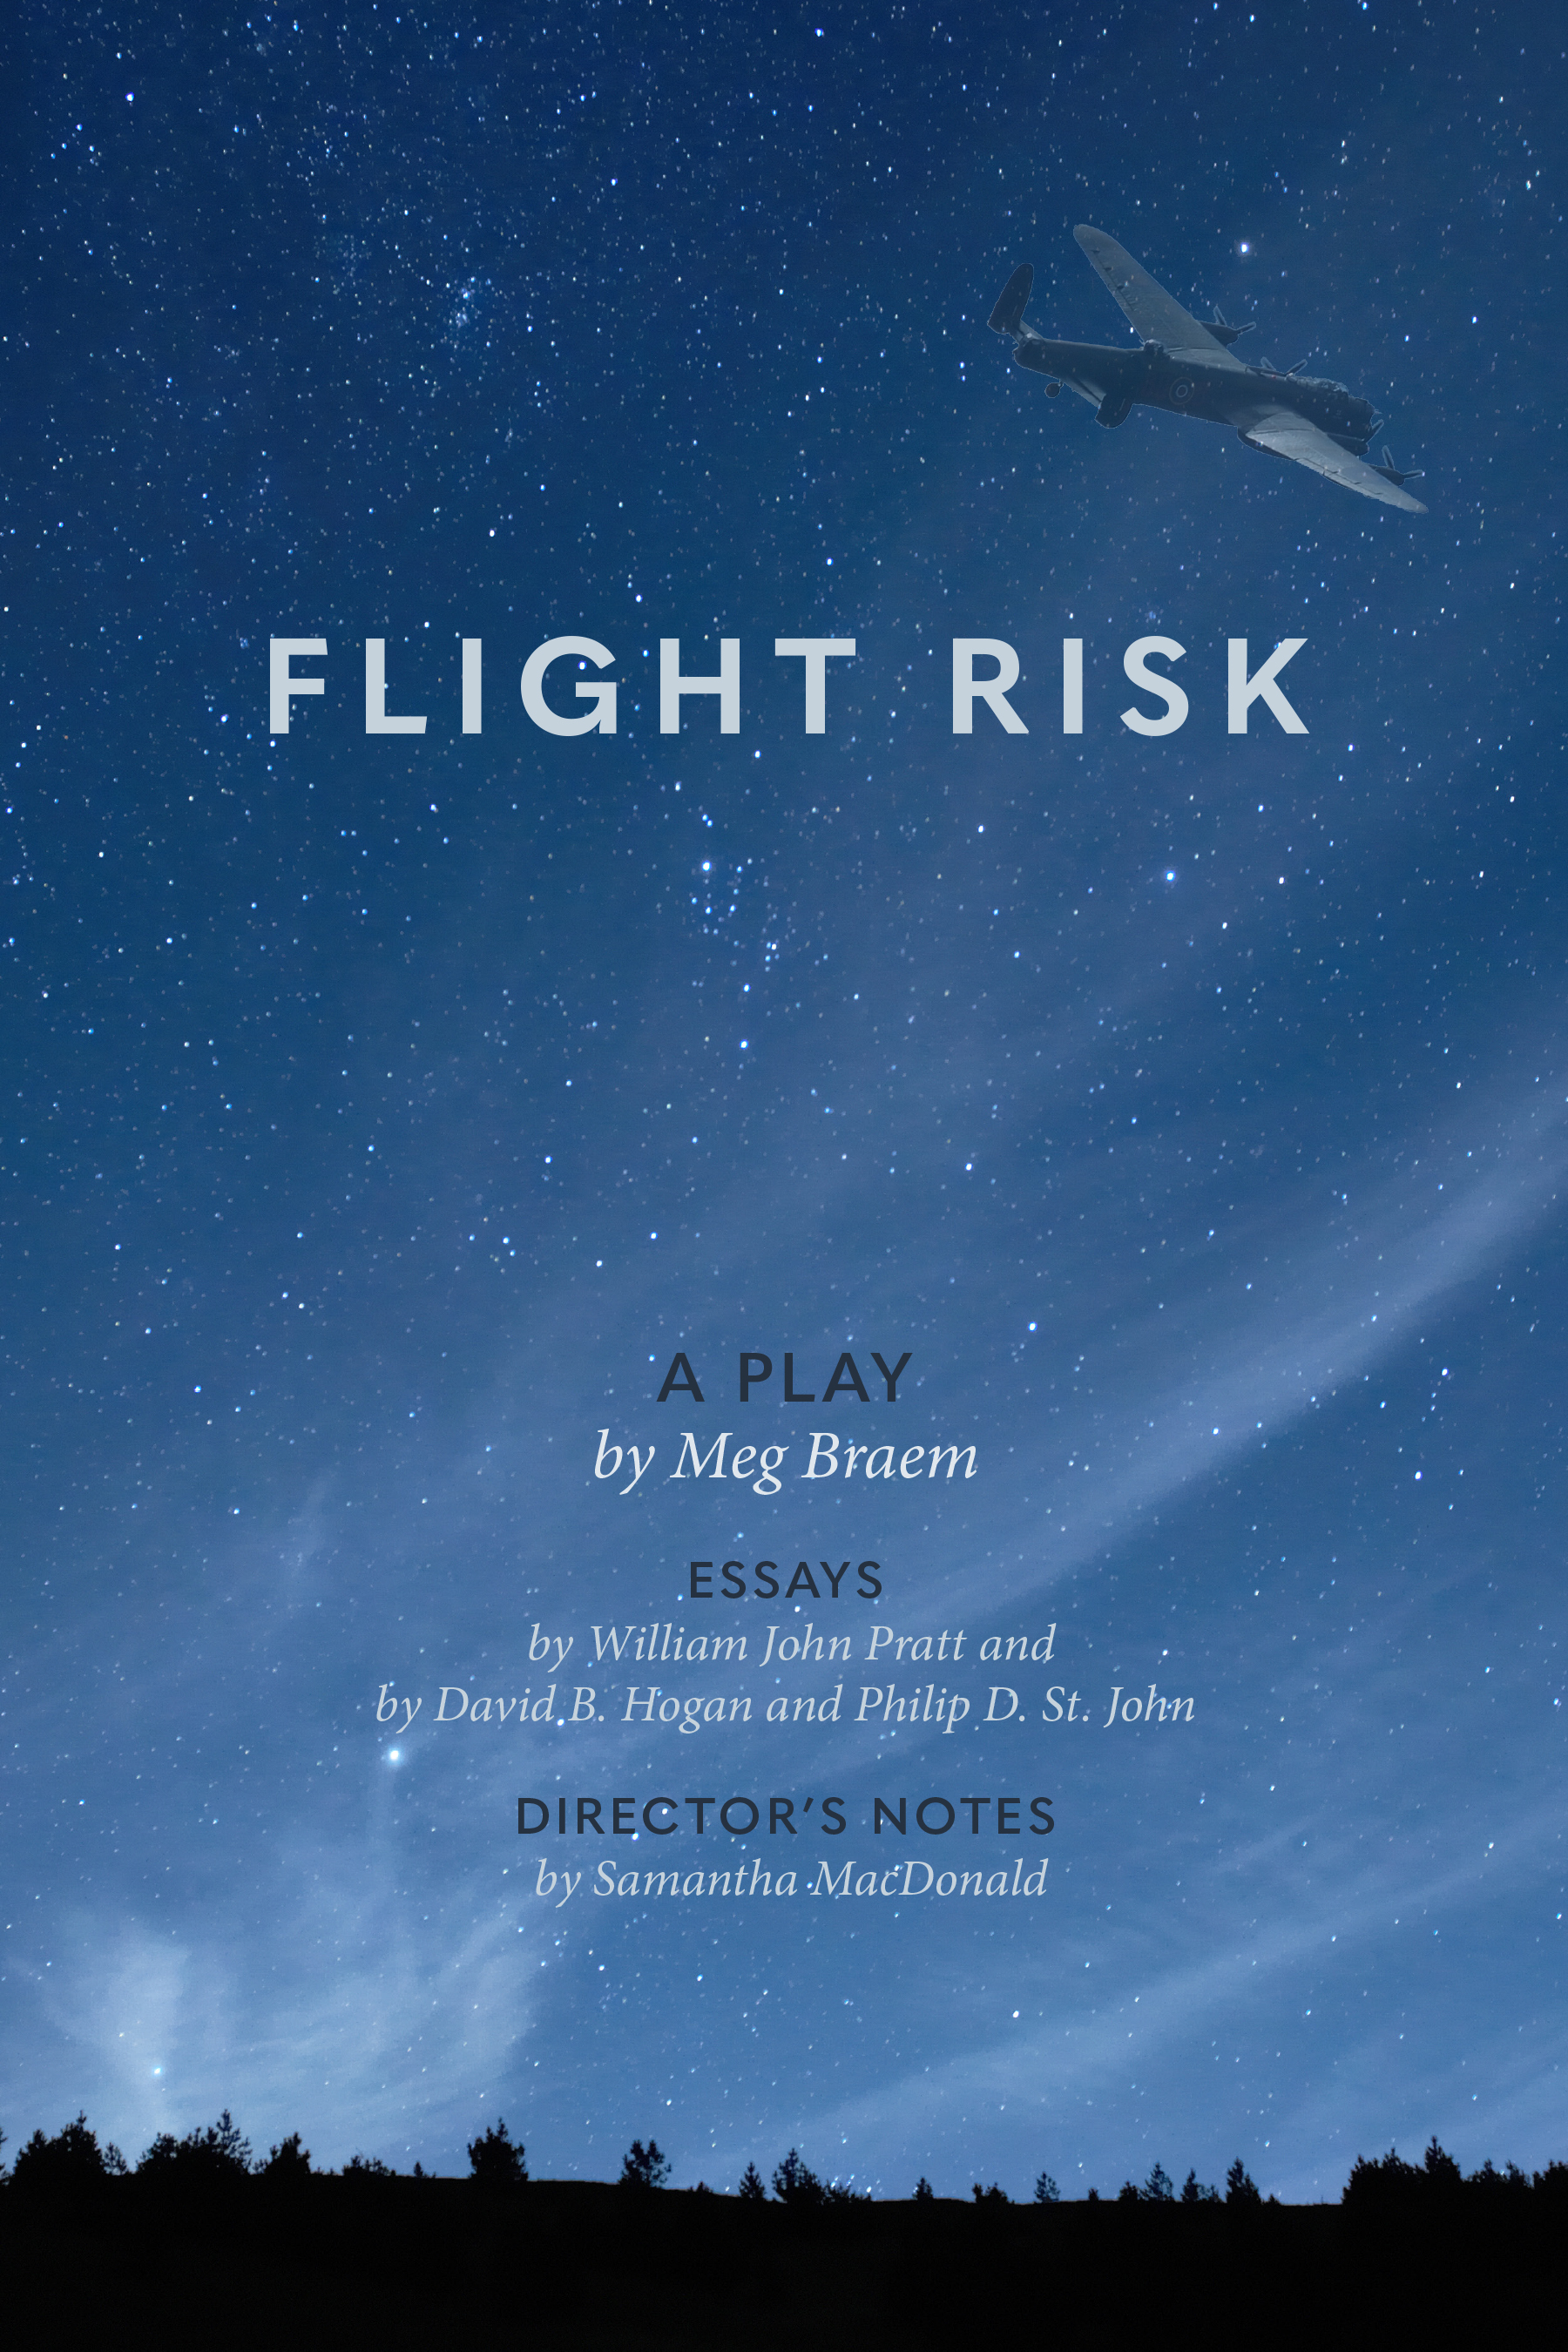 Cover Image for: Flight Risk